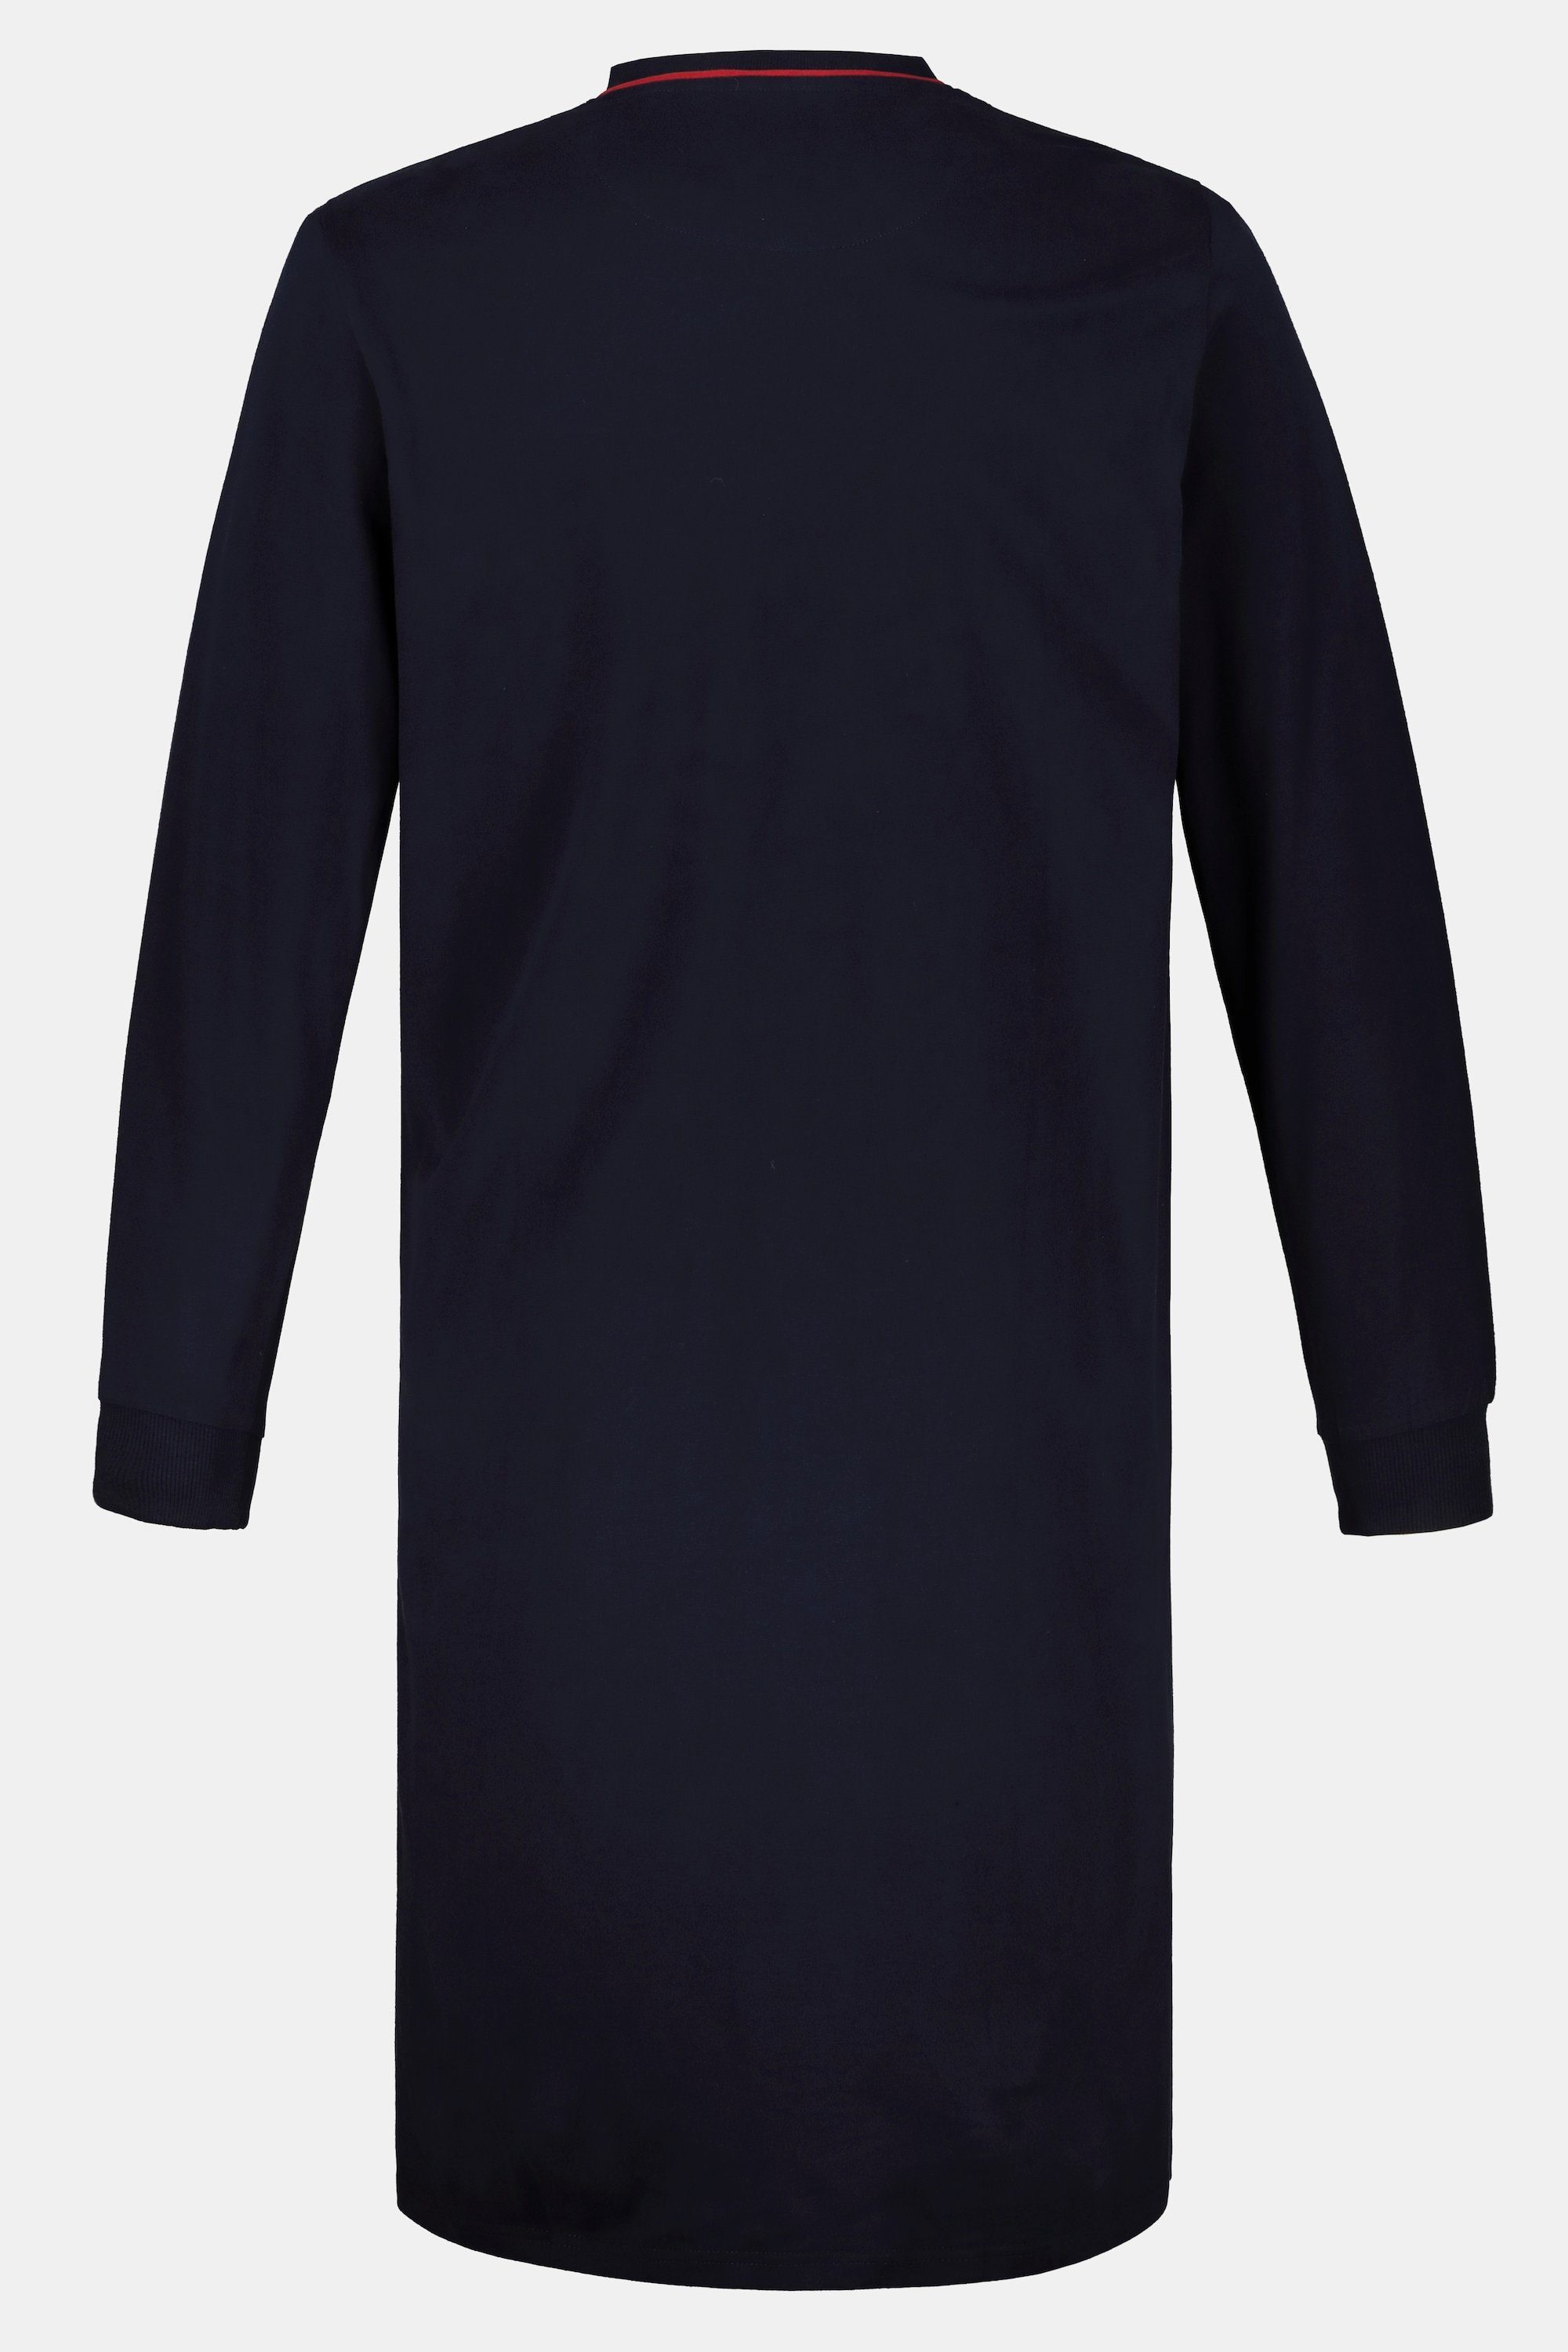 dunkel Langarm Schlafanzug Homewear JP1880 uni Nachthemd marine Gr 8XL bis